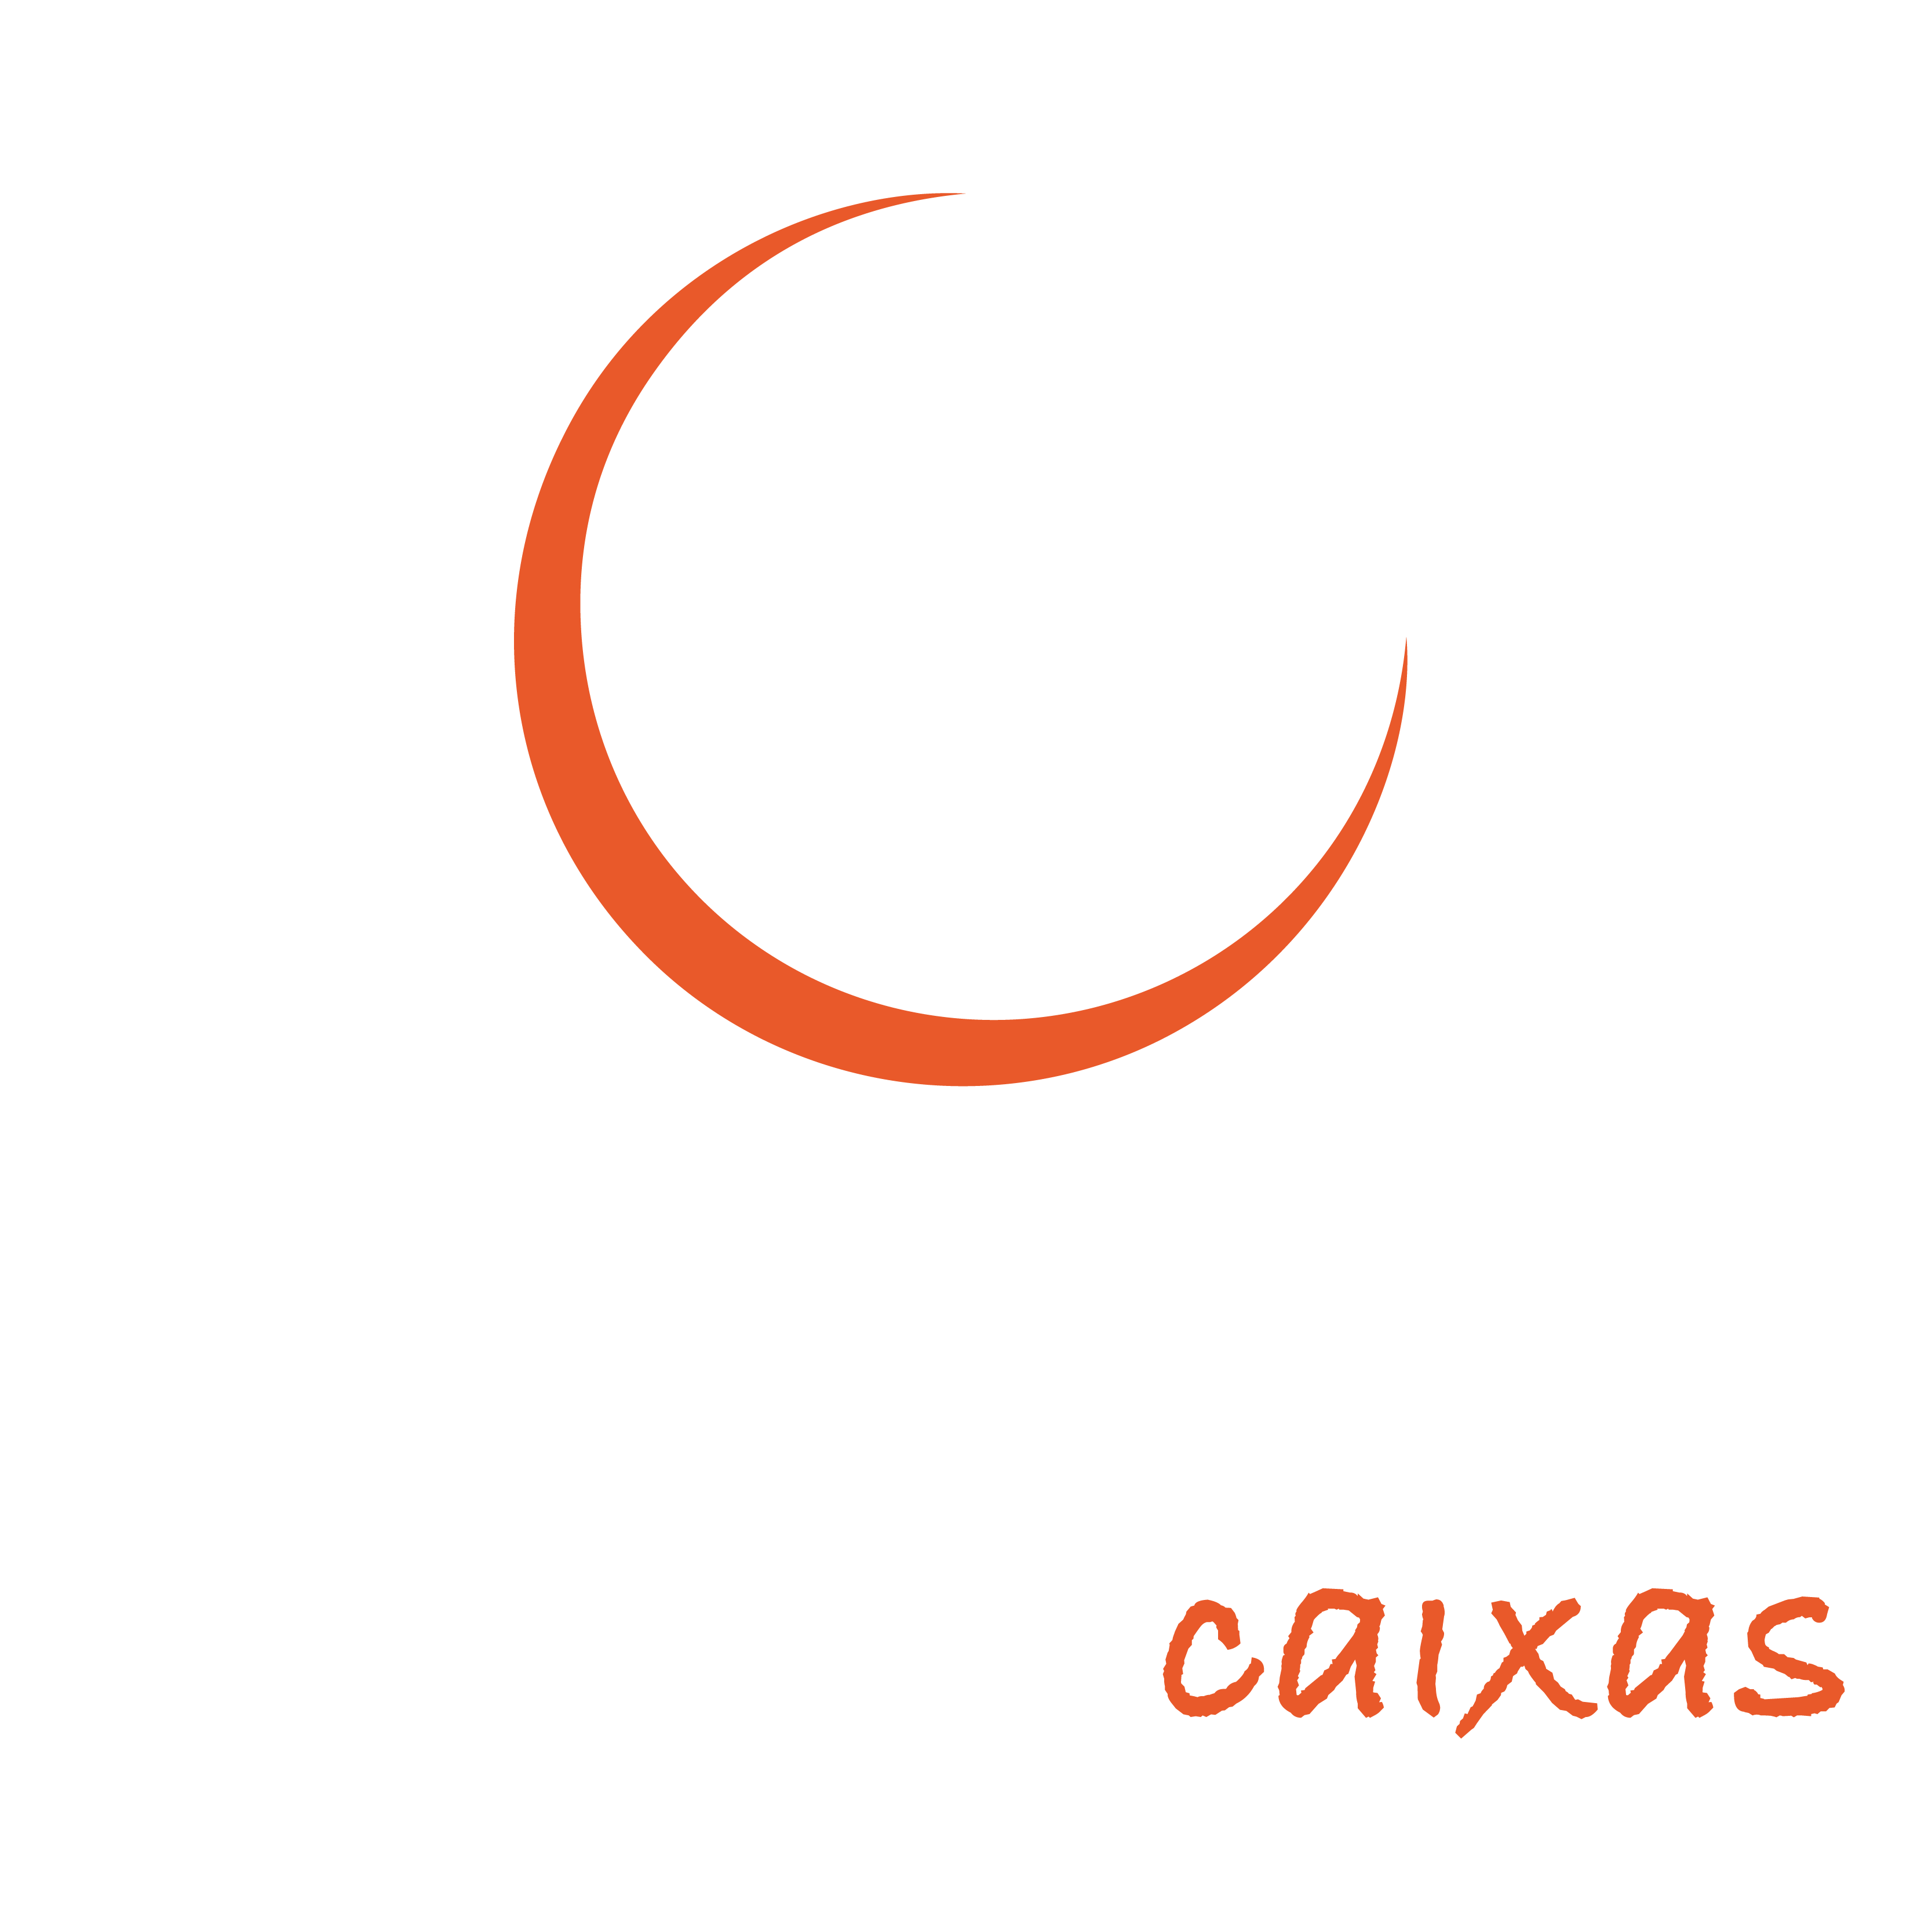 Global Caixas